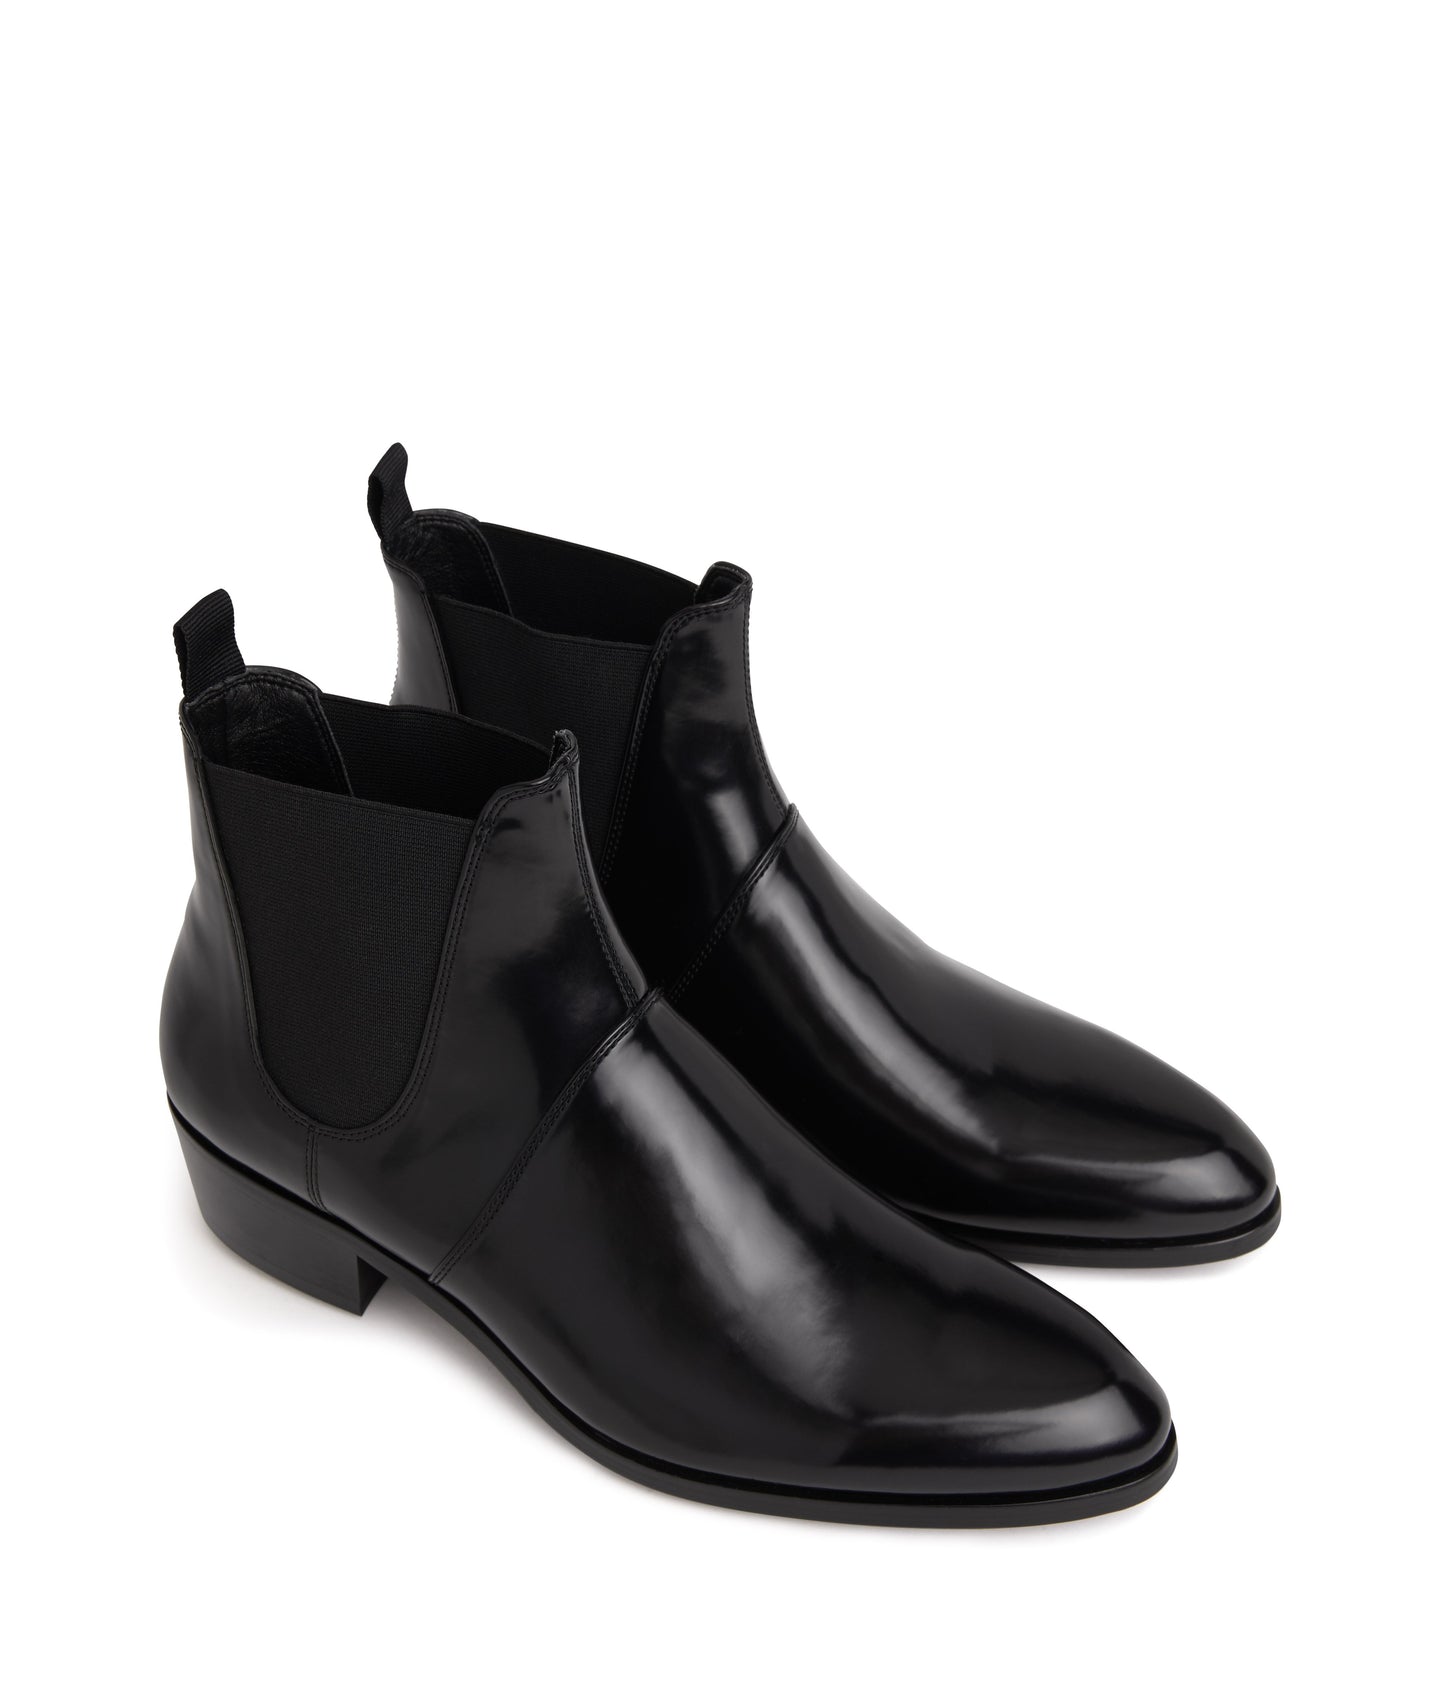 variant::noirpu -- alton shoe noirpu